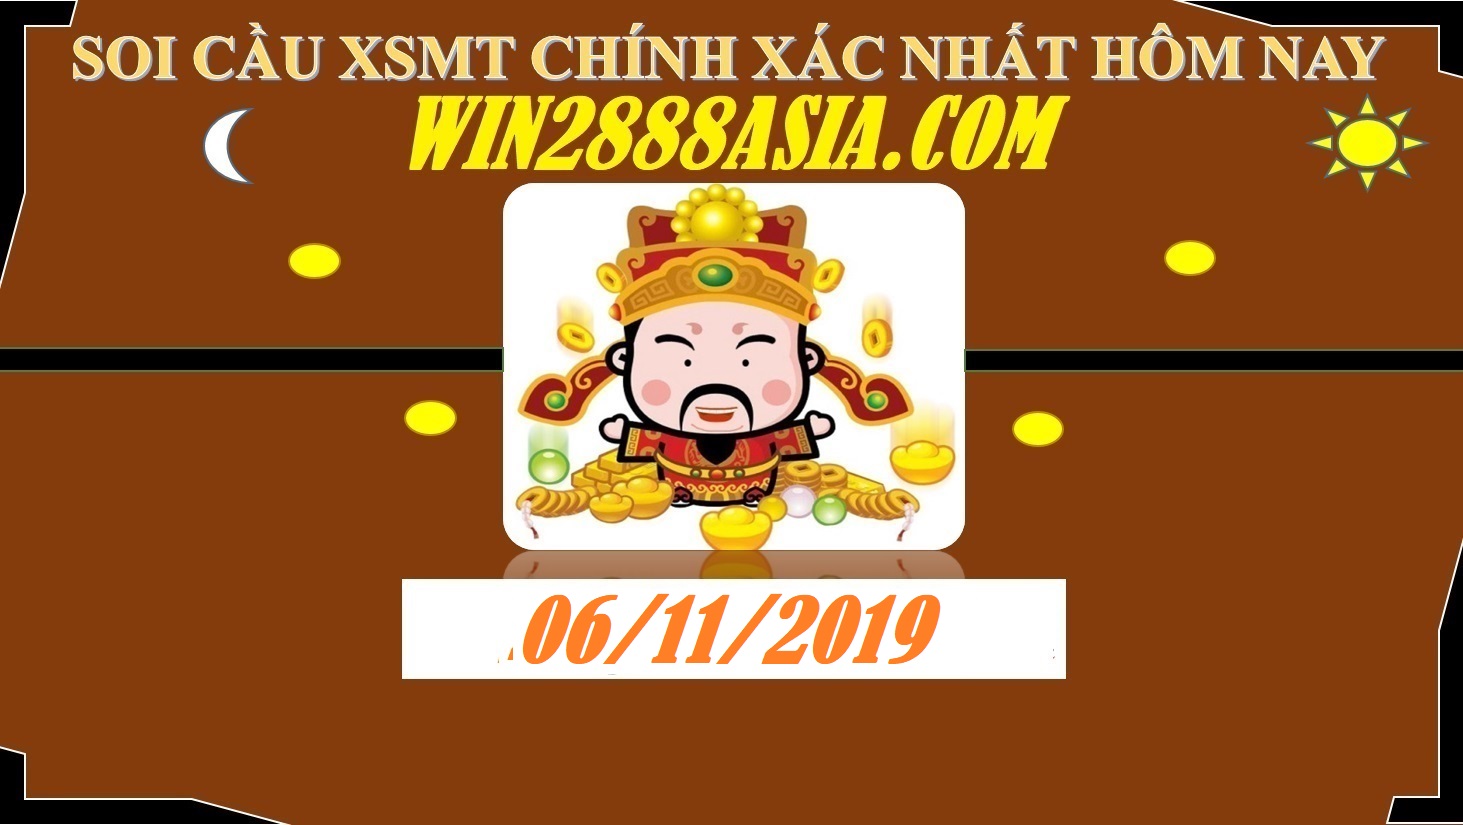 Soi cầu XSMT 6-11-2019 Win2888 Dự đoán Xổ Số Miền Trung thứ 4